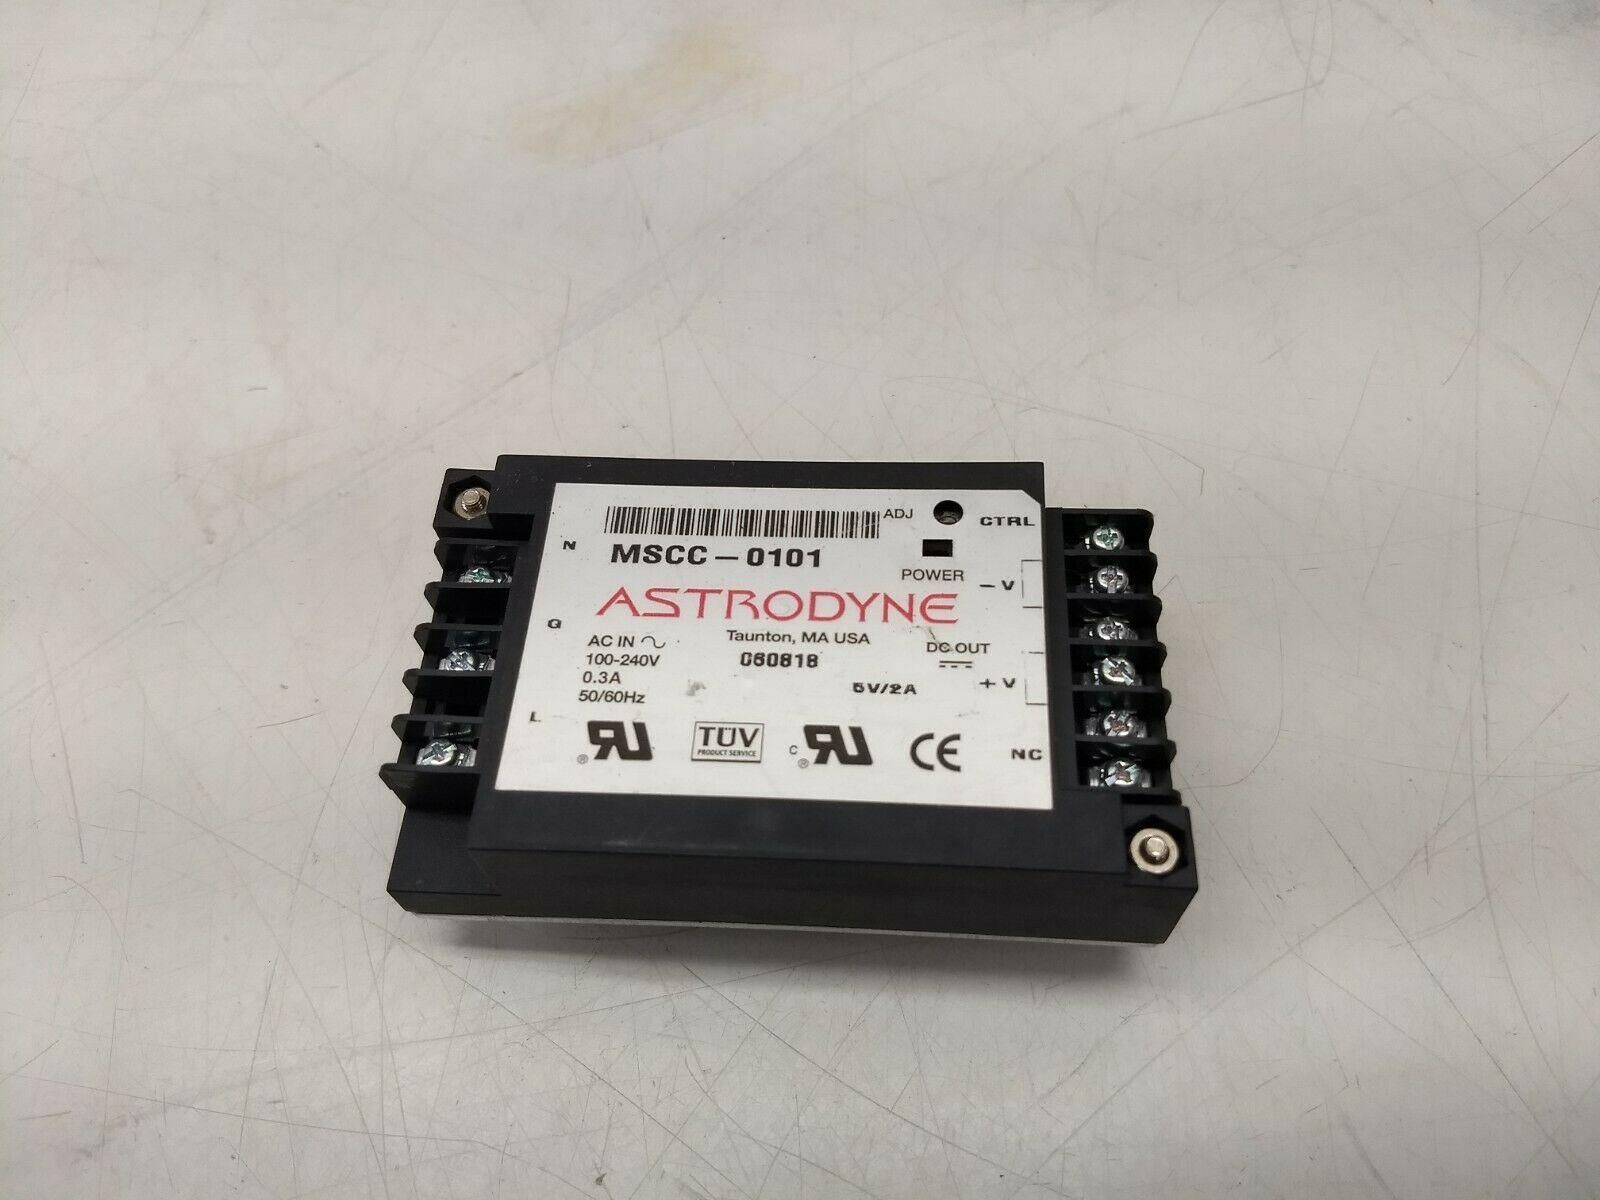 Astrodyne MSCC-0101 Modular Switching DC Power Supply 5V, 2A